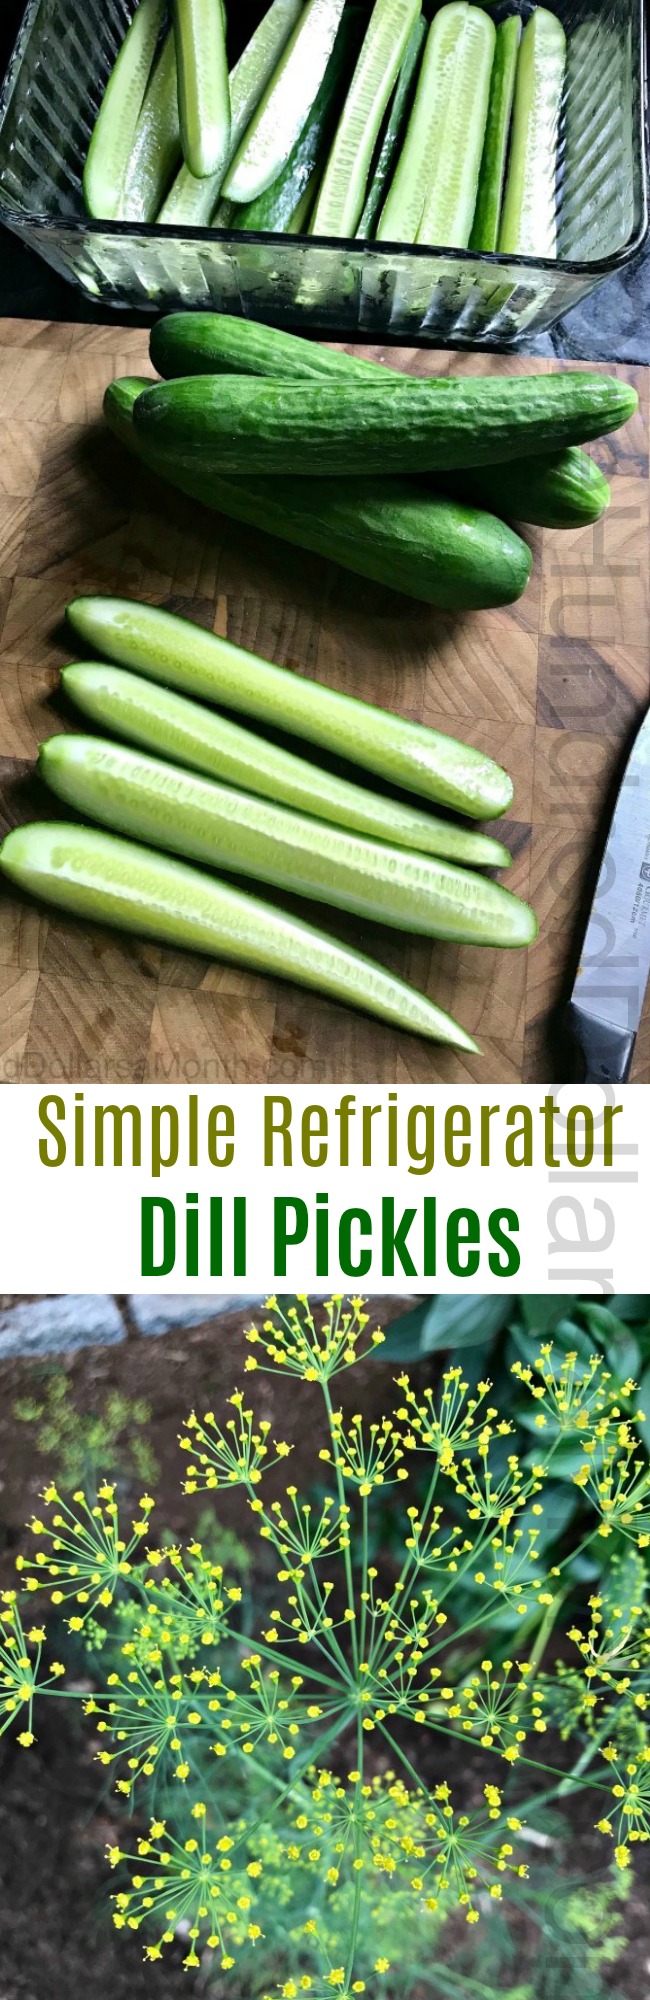 Simple Refrigerator Dill Pickles Recipe